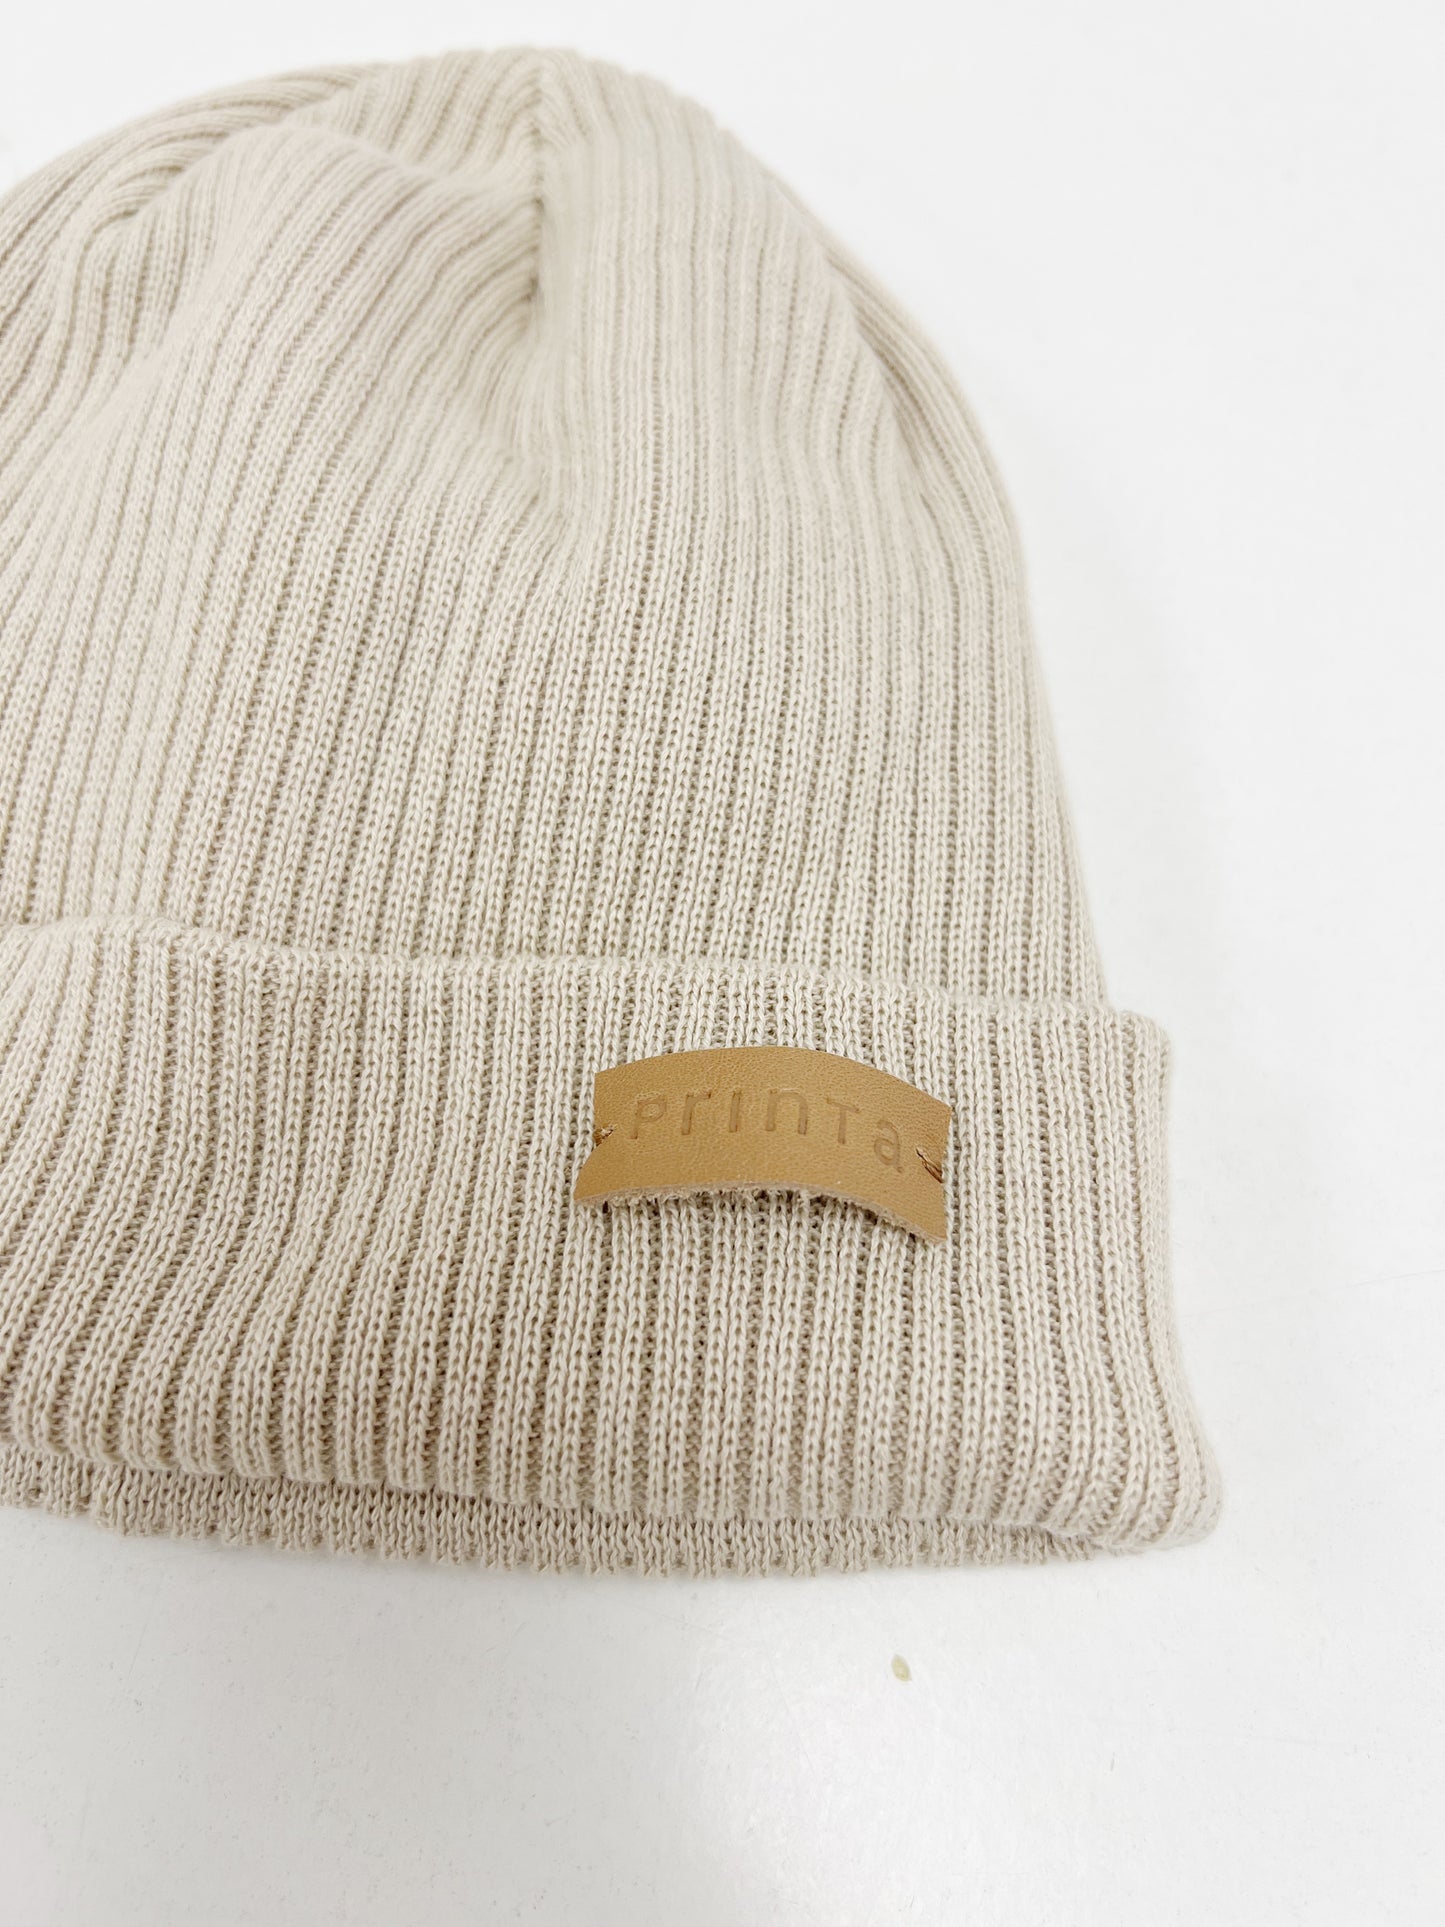 "Printa" beige knitted cap